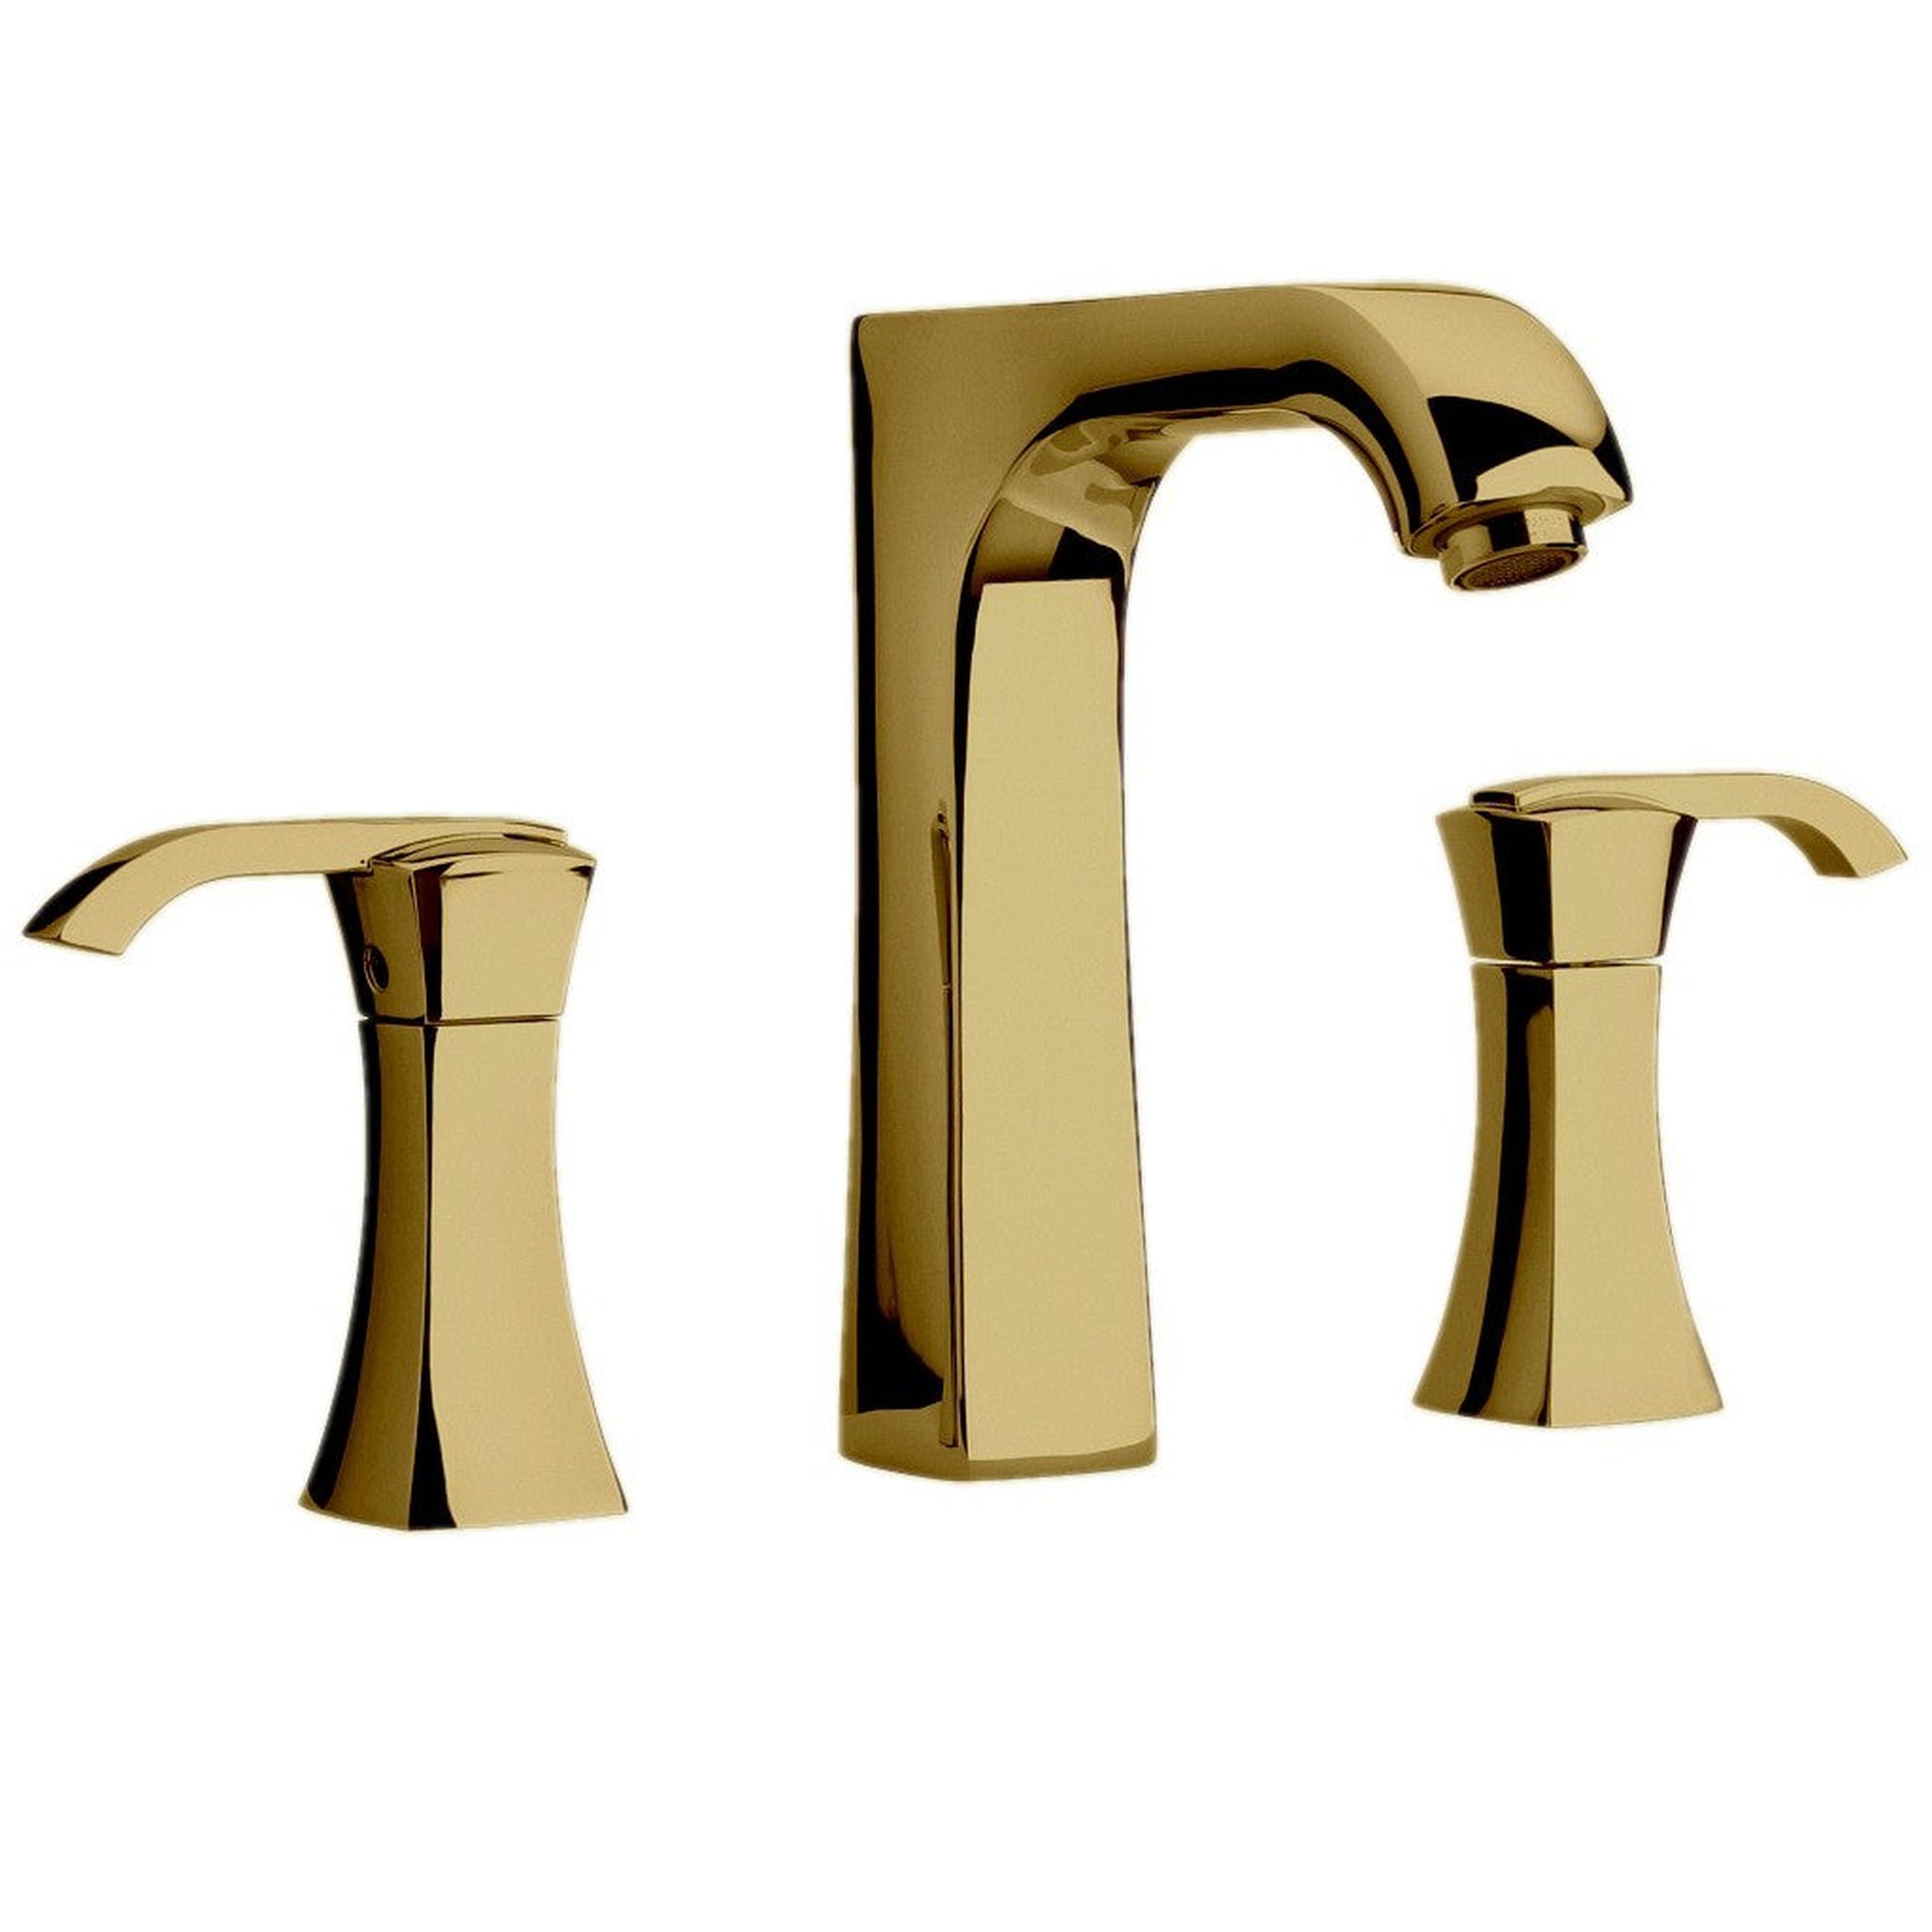 LaToscana Lady Matt Gold Roman Tub Faucet With Lever Handles